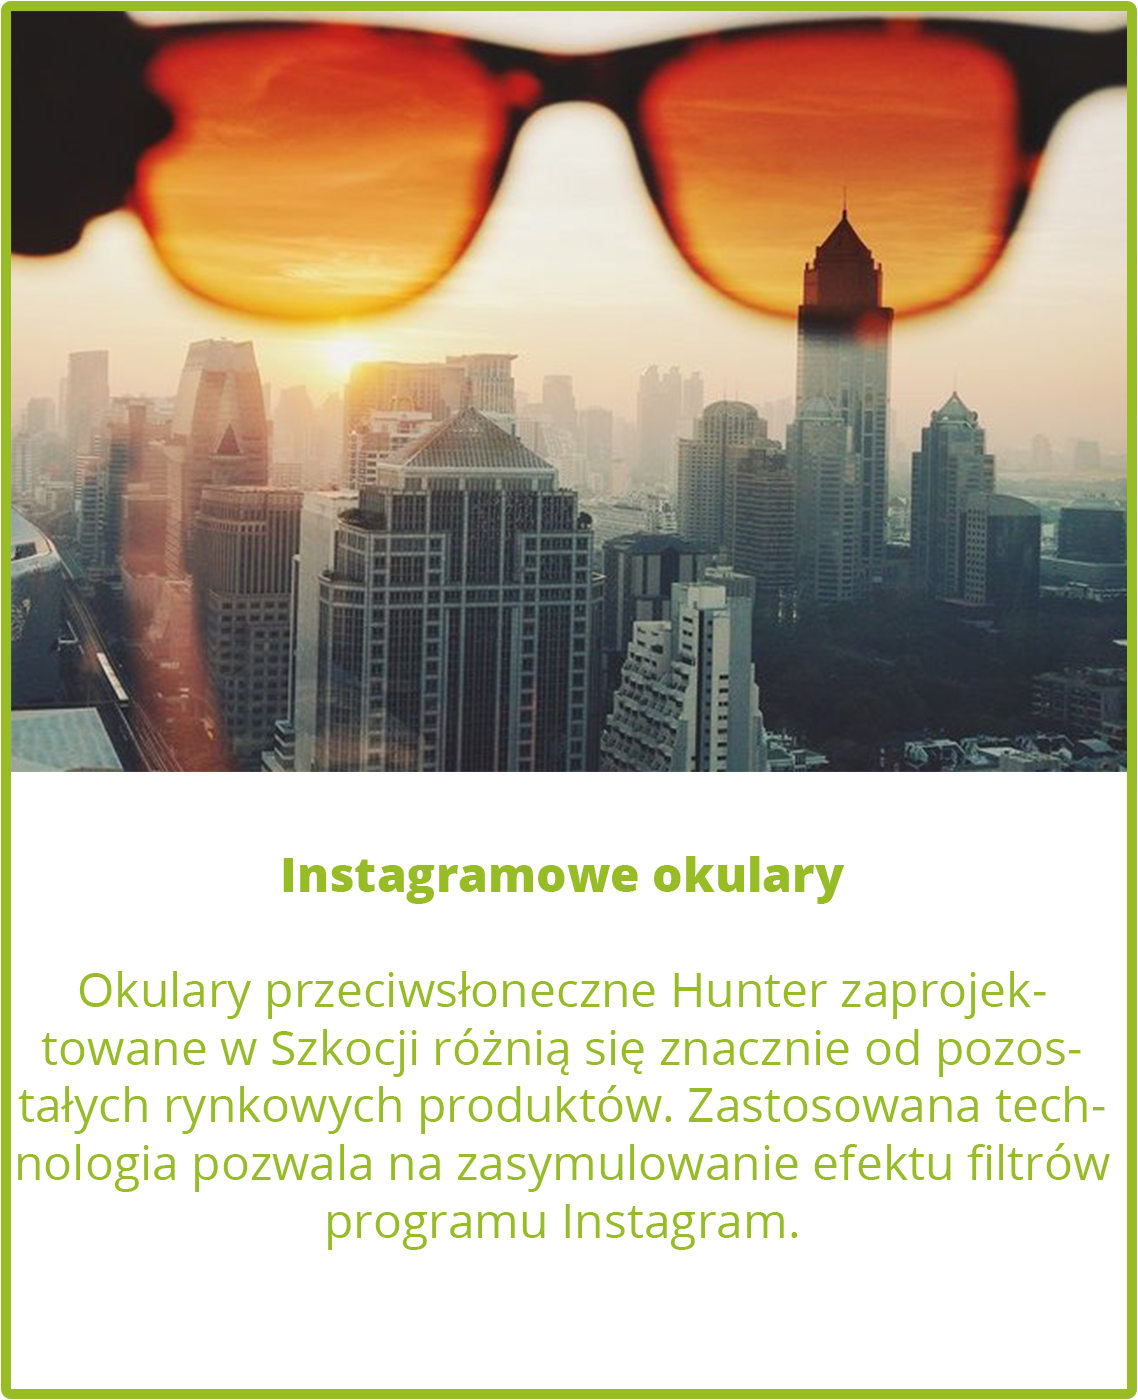 Instagramowe okulary